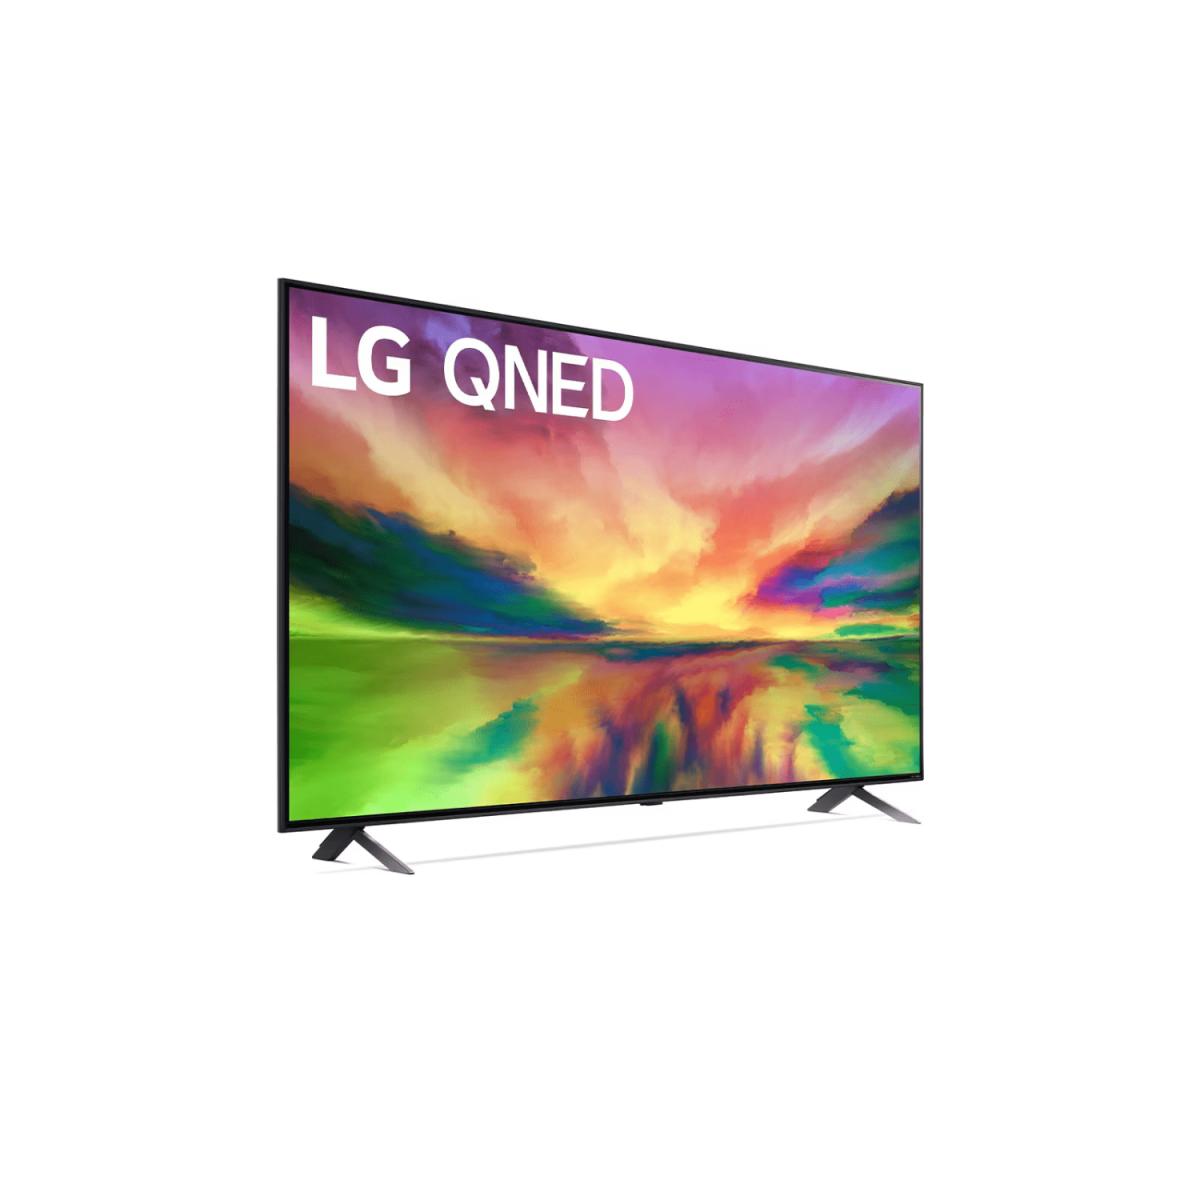 TV LG QNED 55" SMART AI THINQ 4K